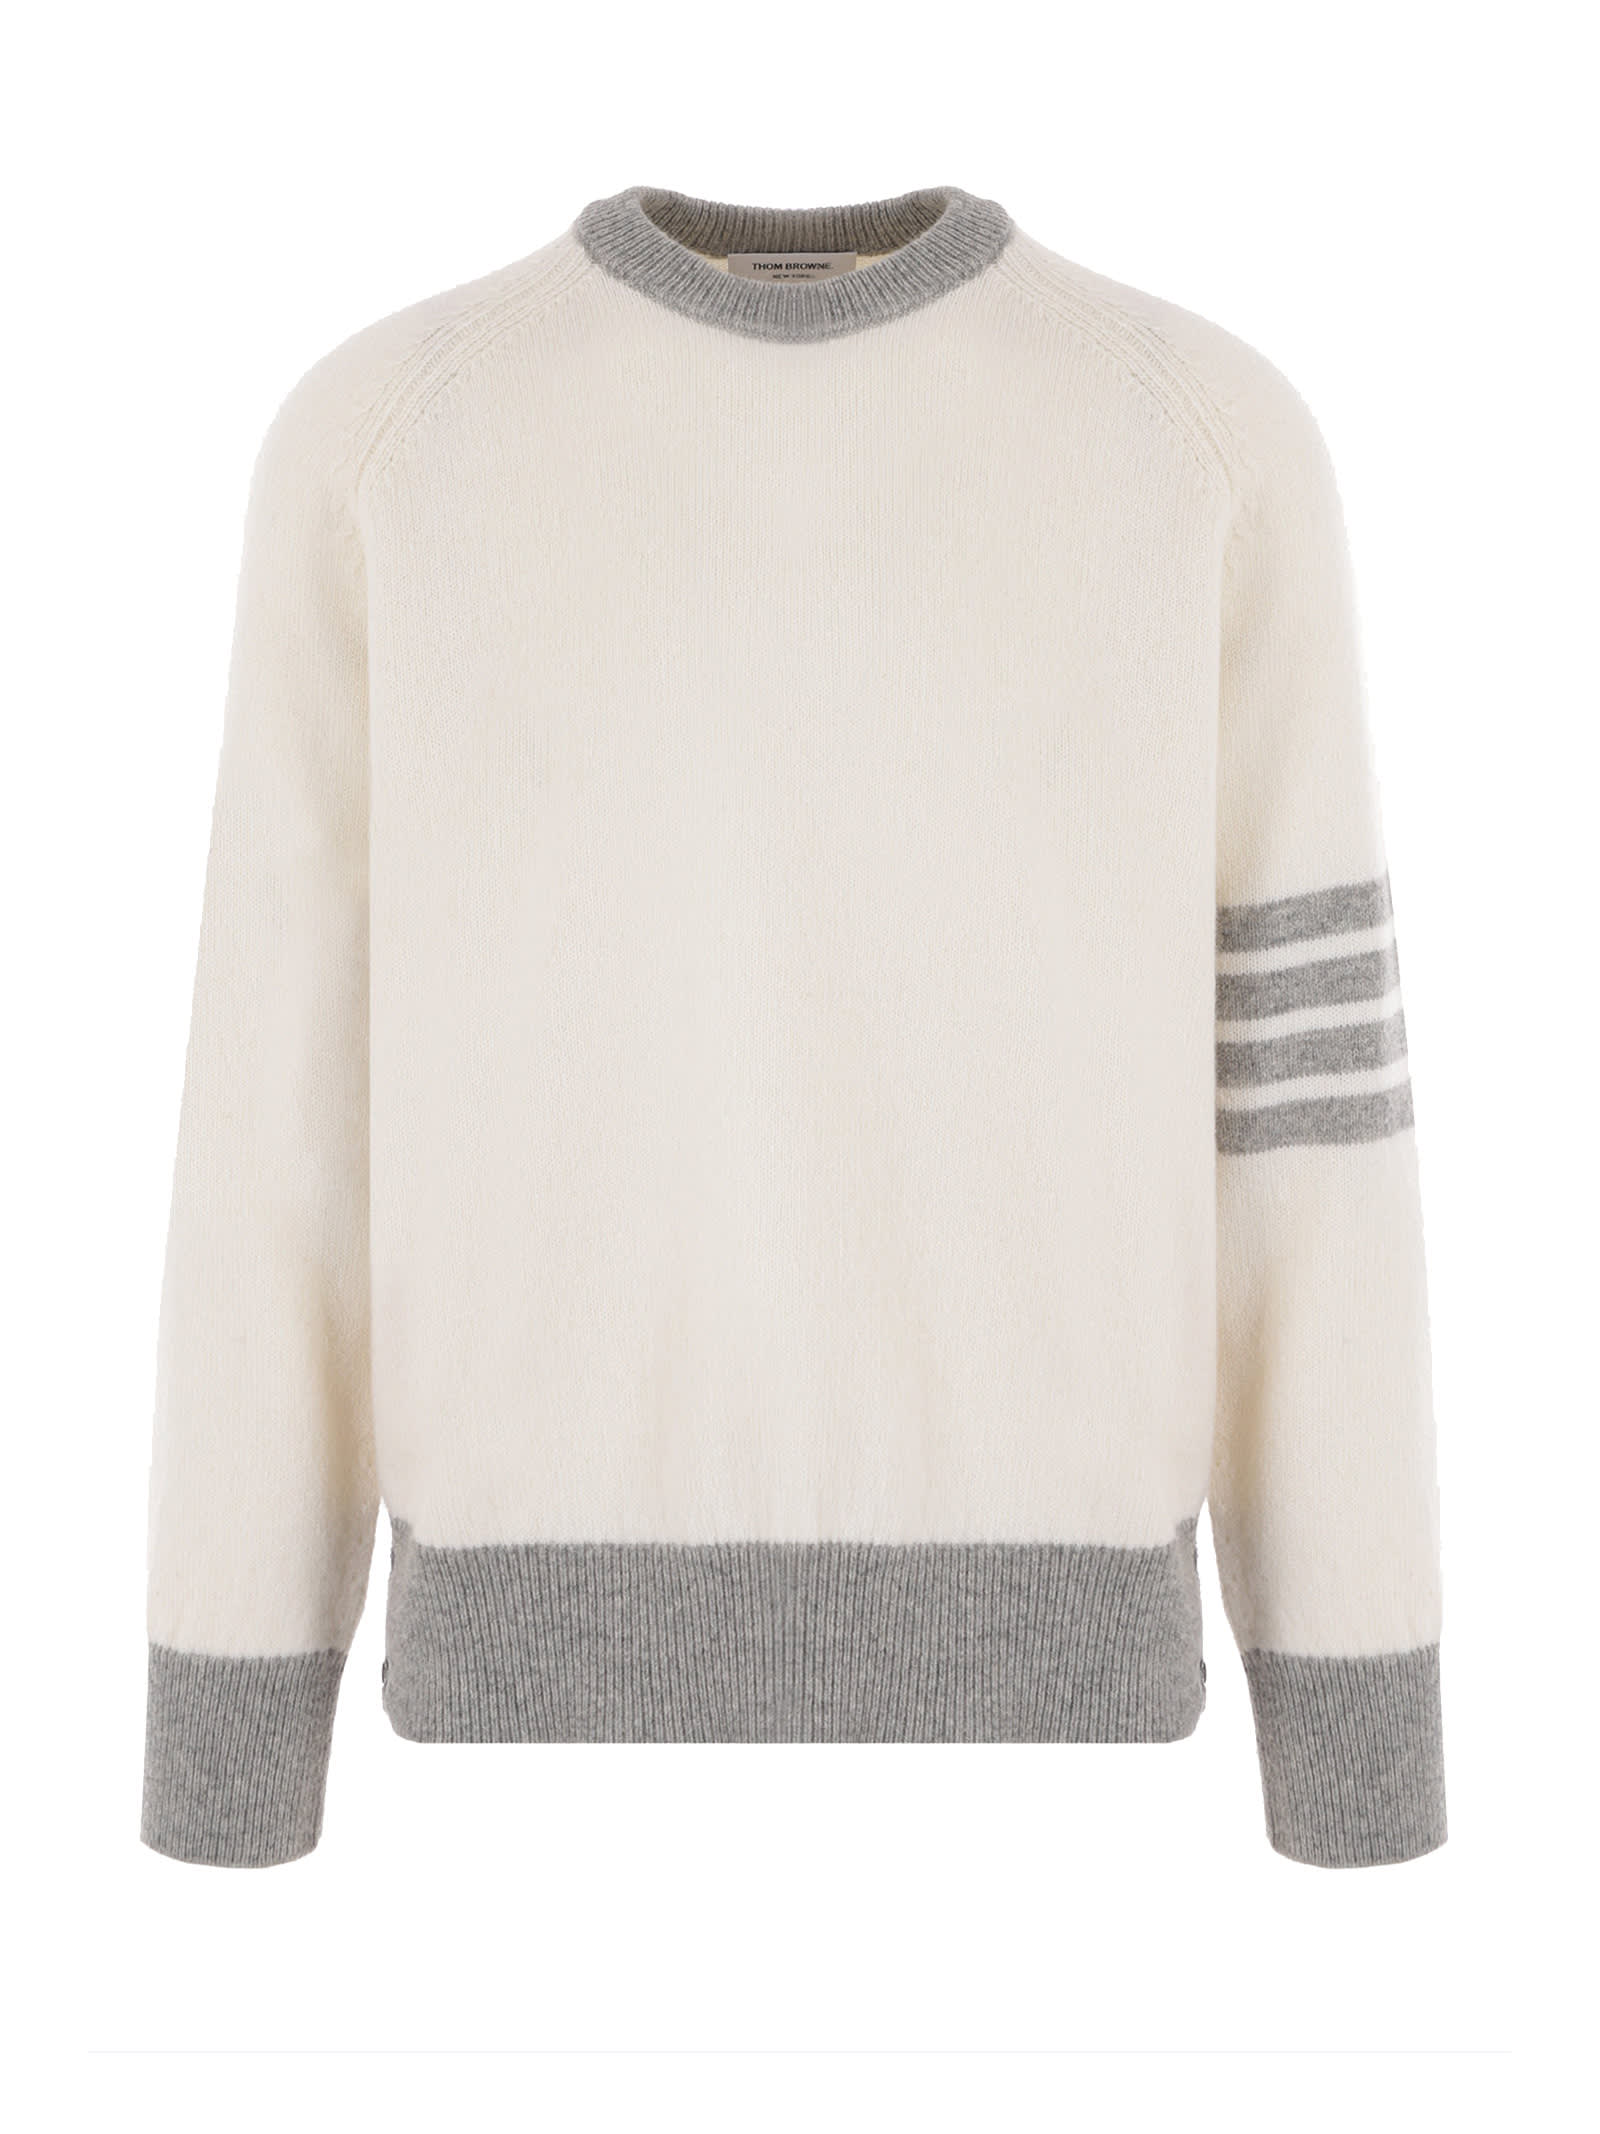 Thom Browne White Gray Crew Neck Sweater